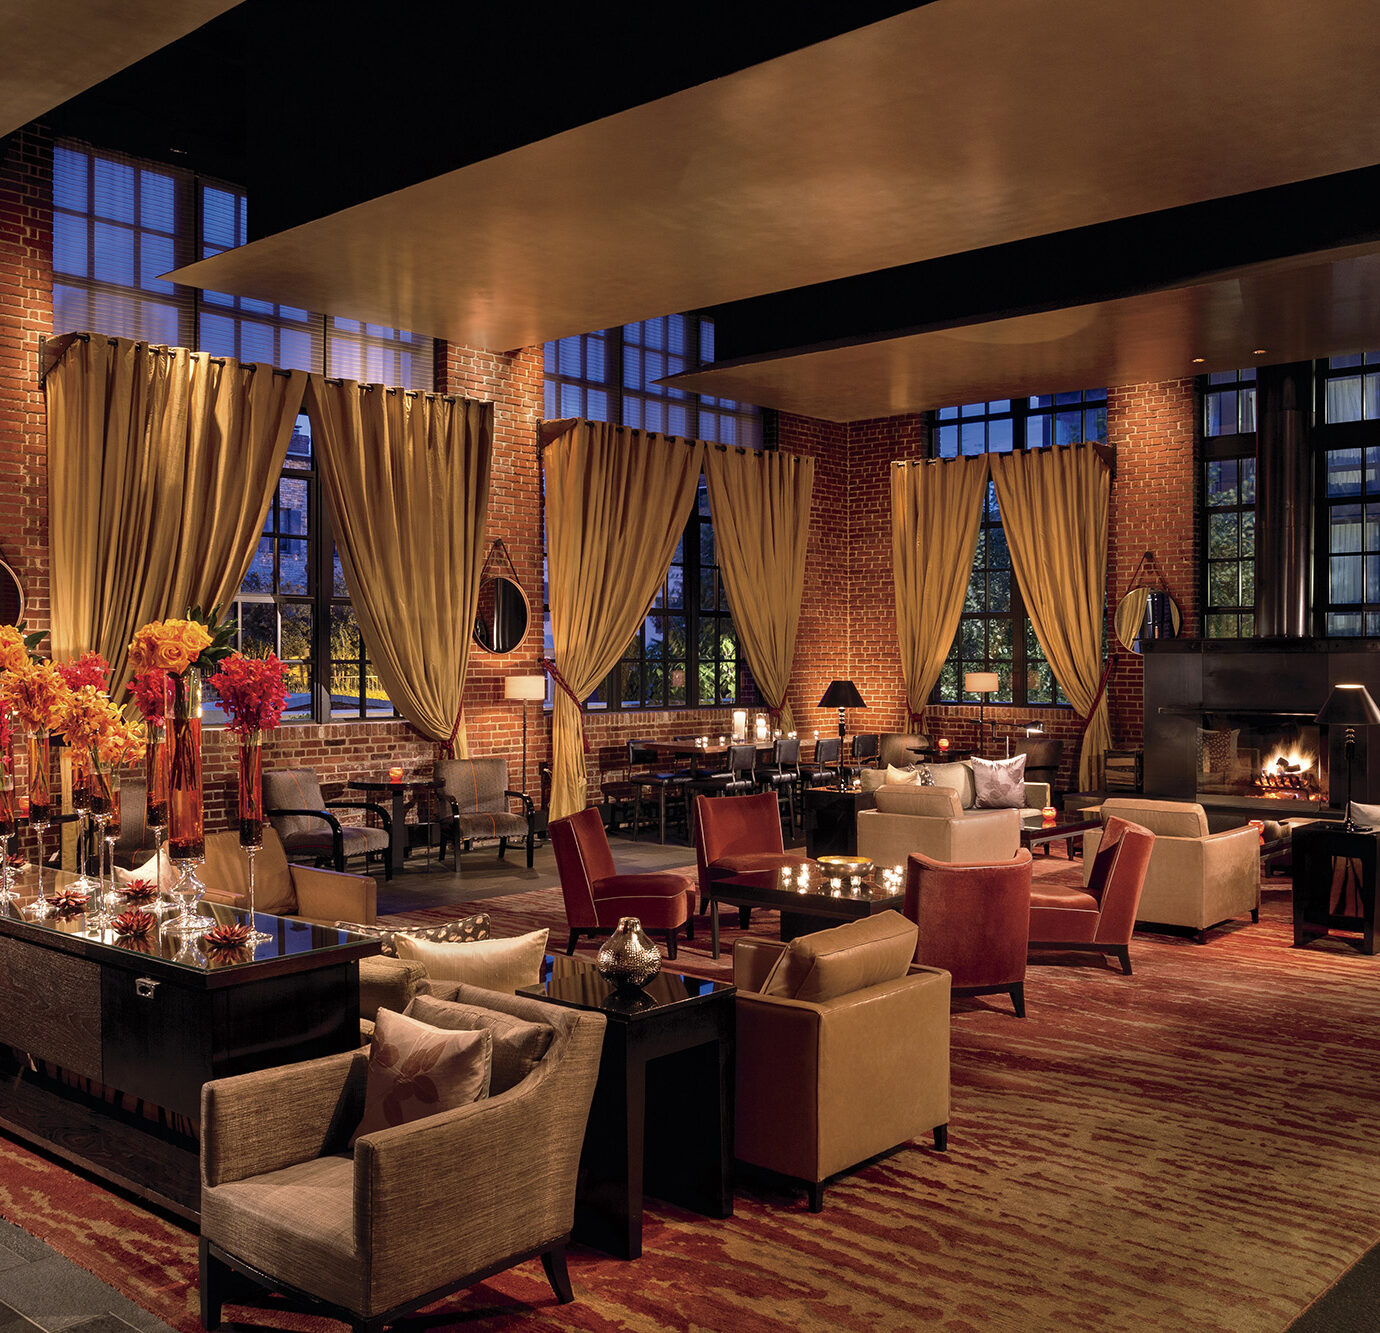 Dining room at The Ritz-Carlton Georgetown, Washington, D.C.